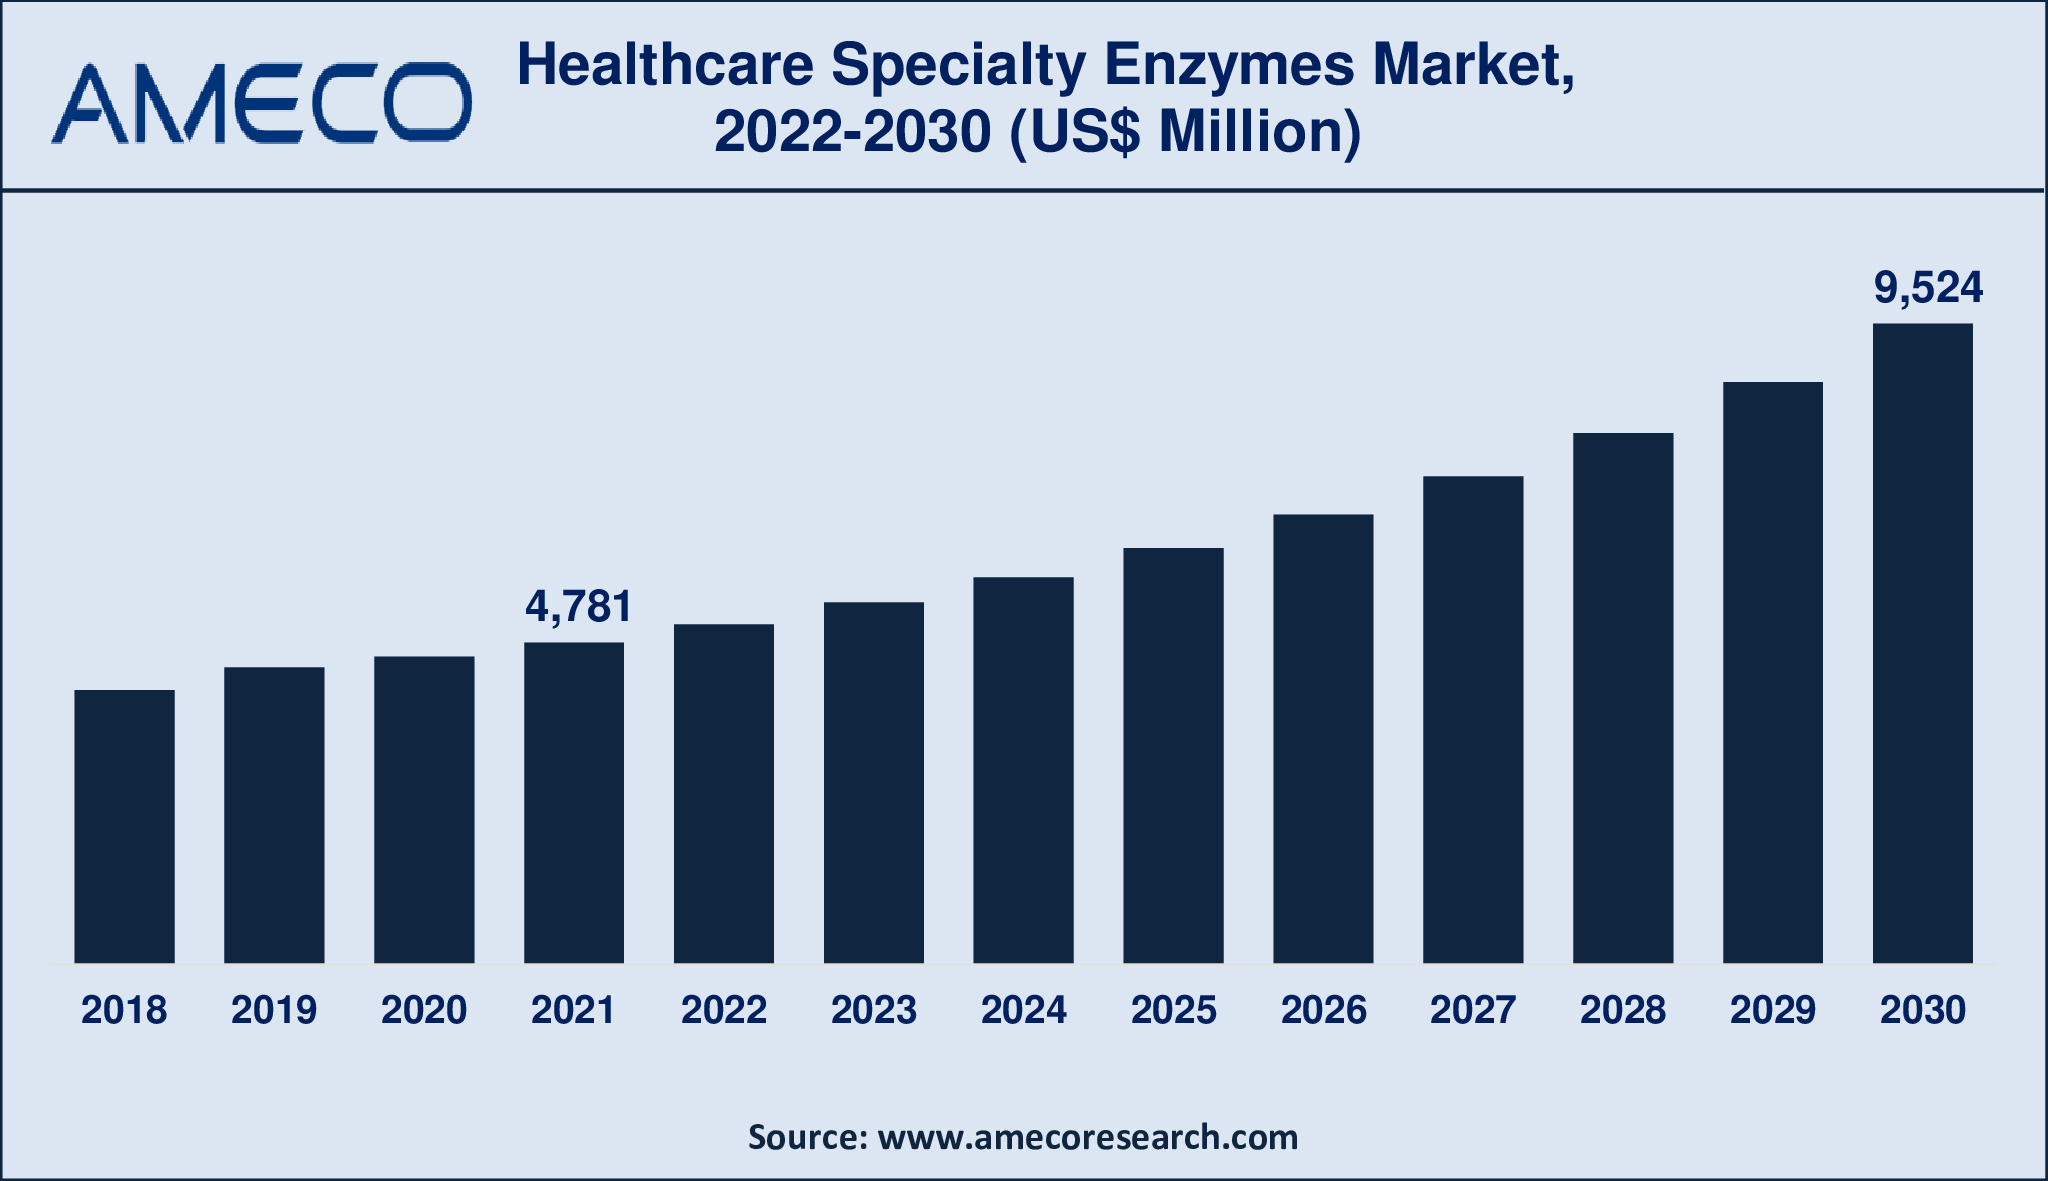 Healthcare Specialty Enzymes Market Report 2030